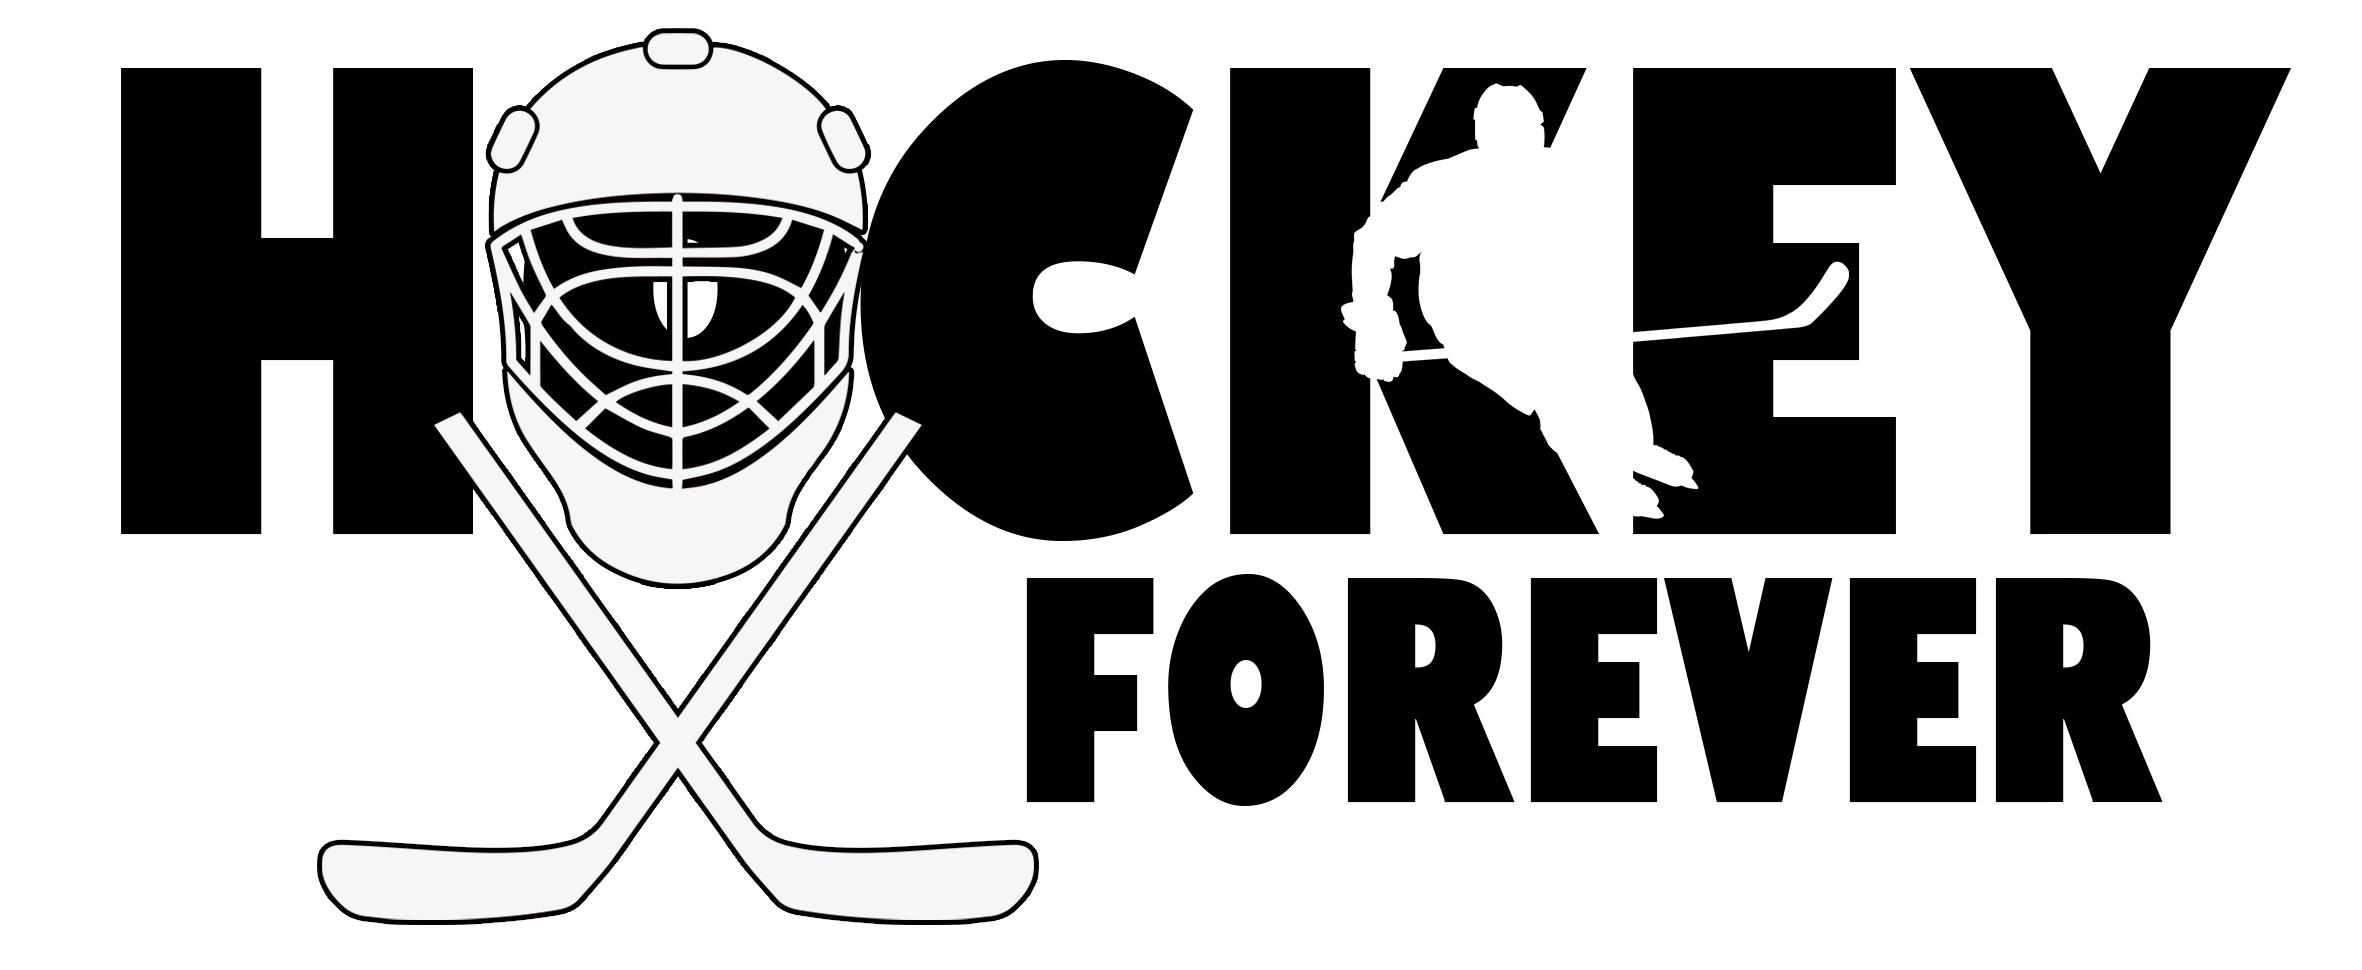 Free Hockey Forever SVG File